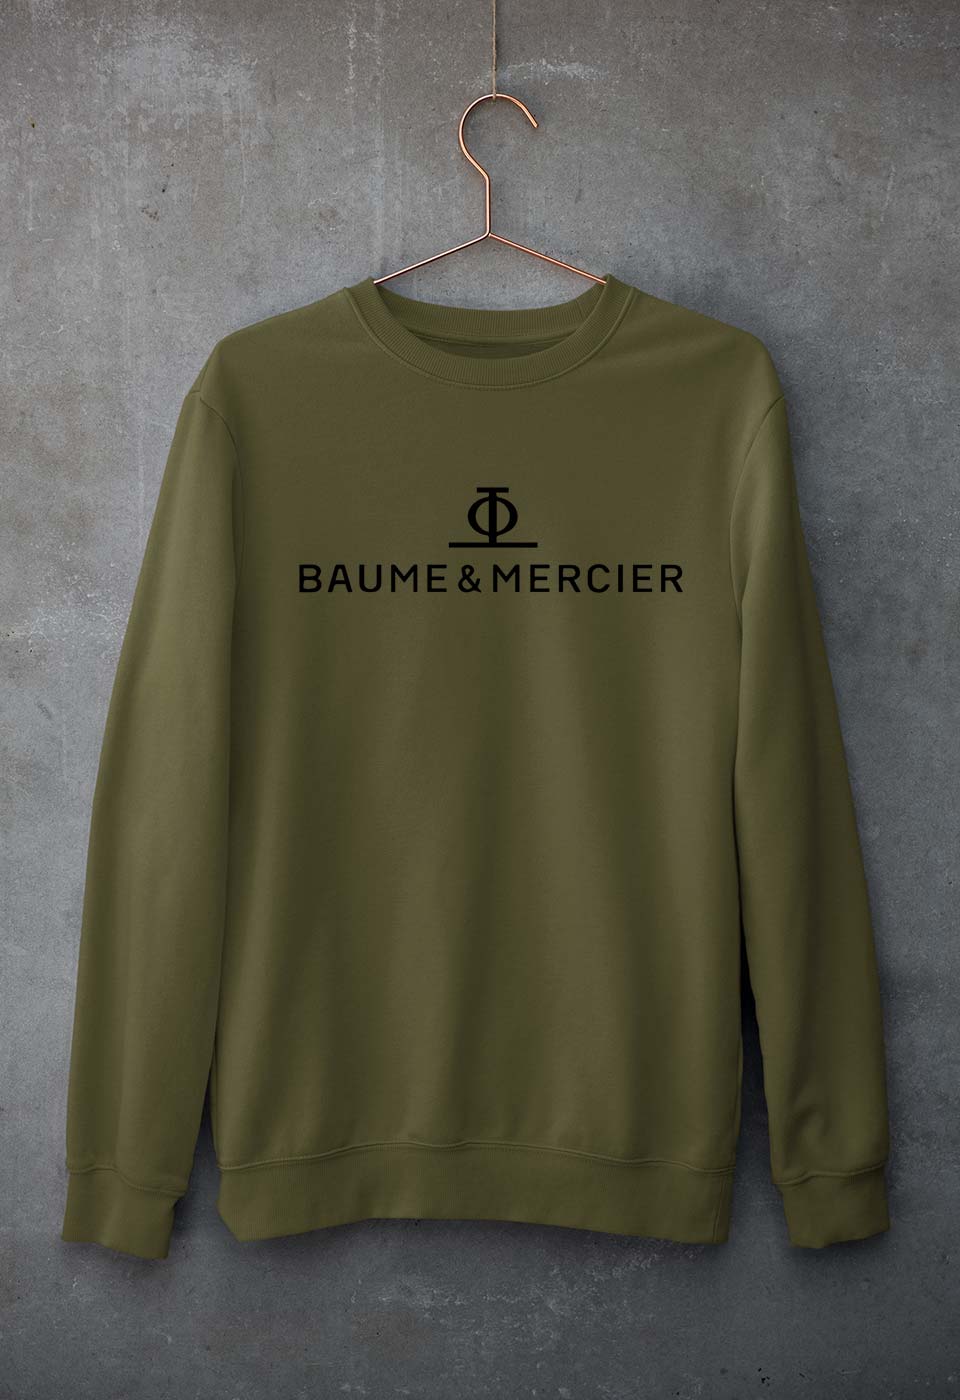 Baume & Mercier Unisex Sweatshirt for Men/Women-S(40 Inches)-Olive Green-Ektarfa.online